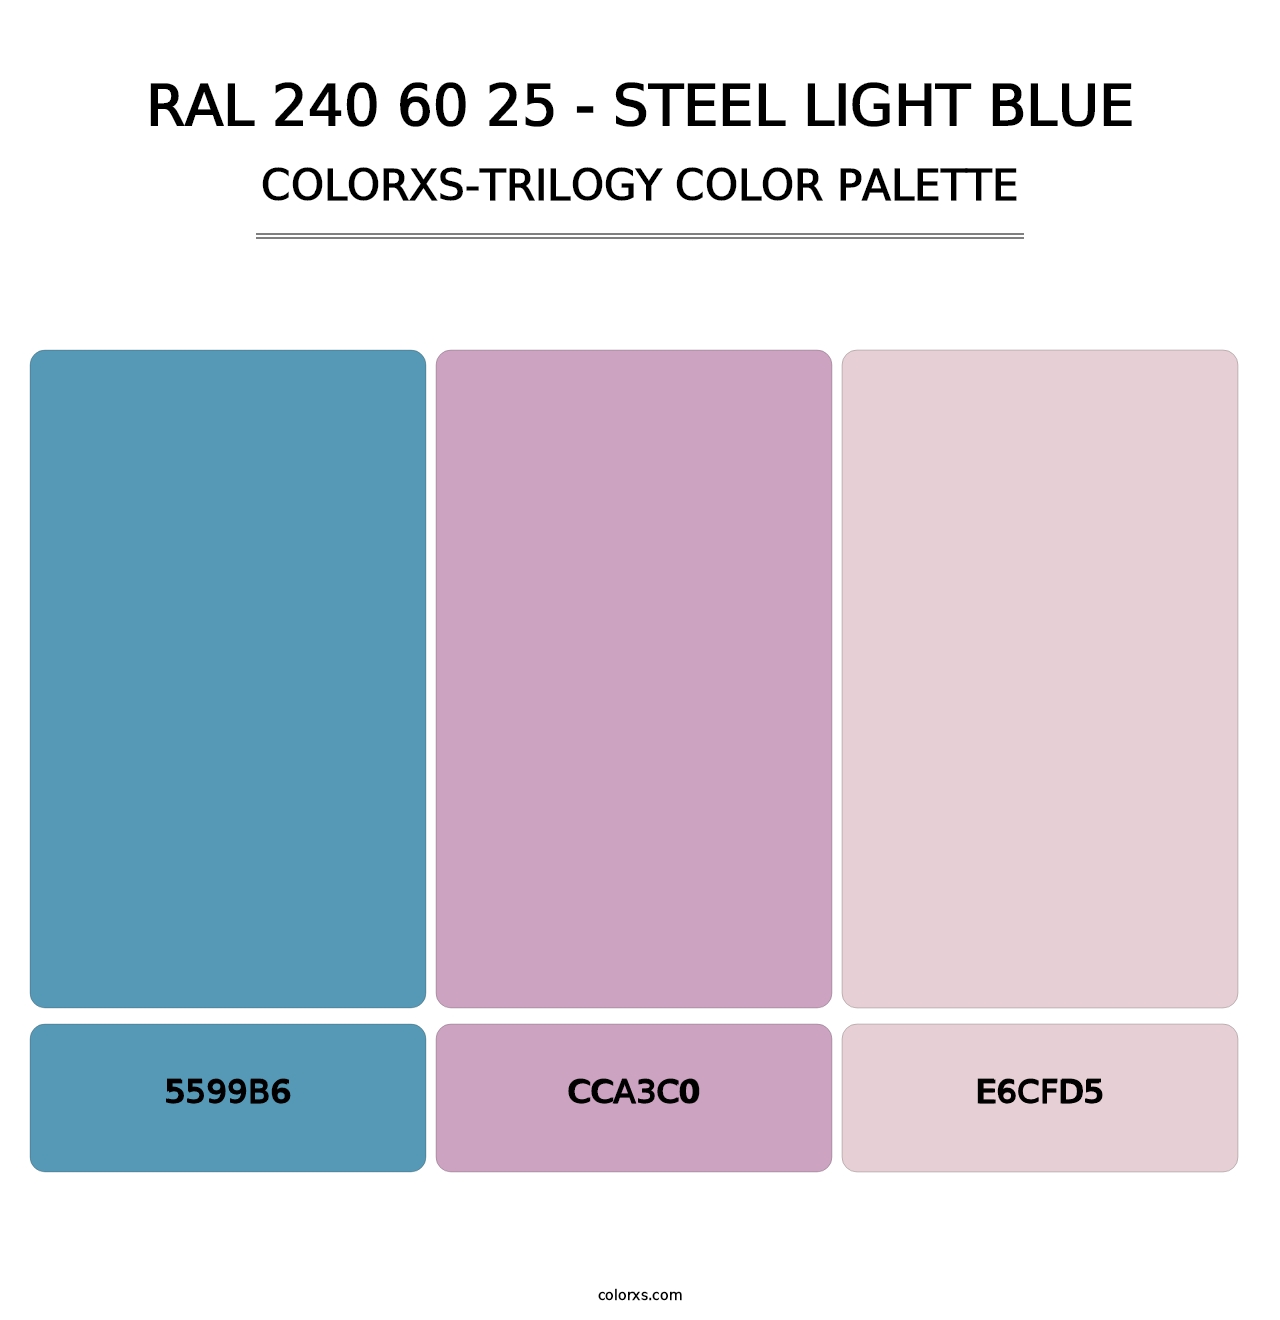 RAL 240 60 25 - Steel Light Blue - Colorxs Trilogy Palette